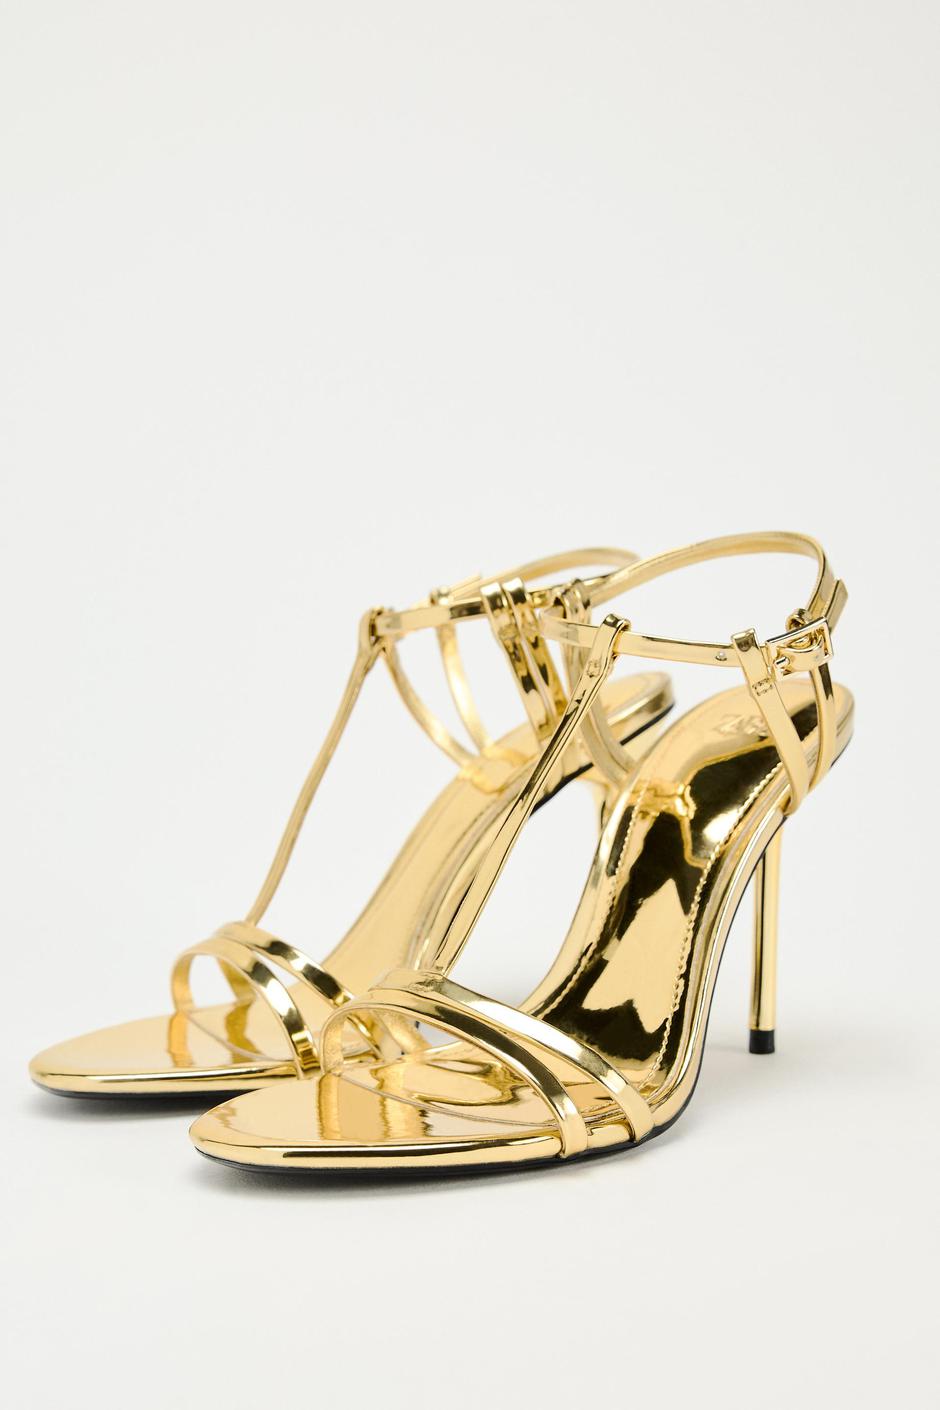 Foto: Zara, zlatne sandale na visoku petu (29,95 eura) | Autor: 